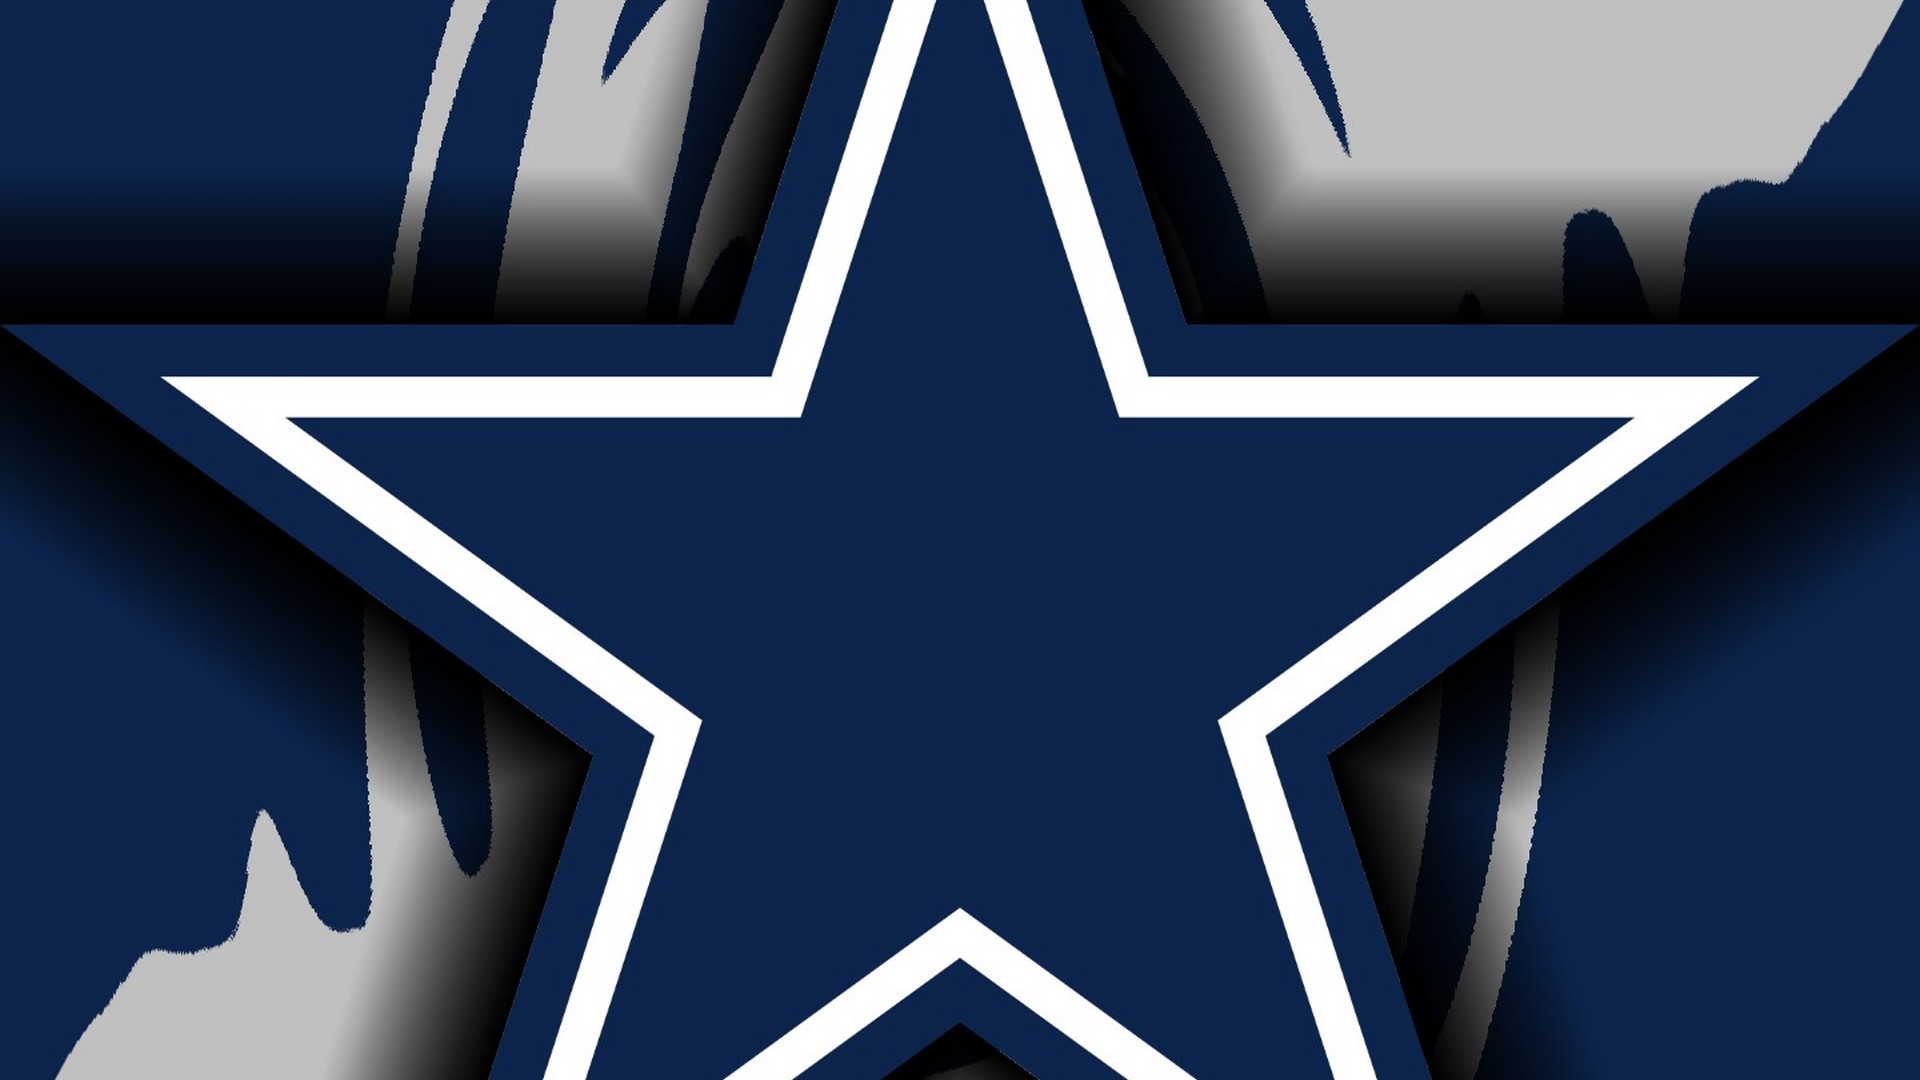 Wallpapers HD Dallas Cowboys | 2020 NFL